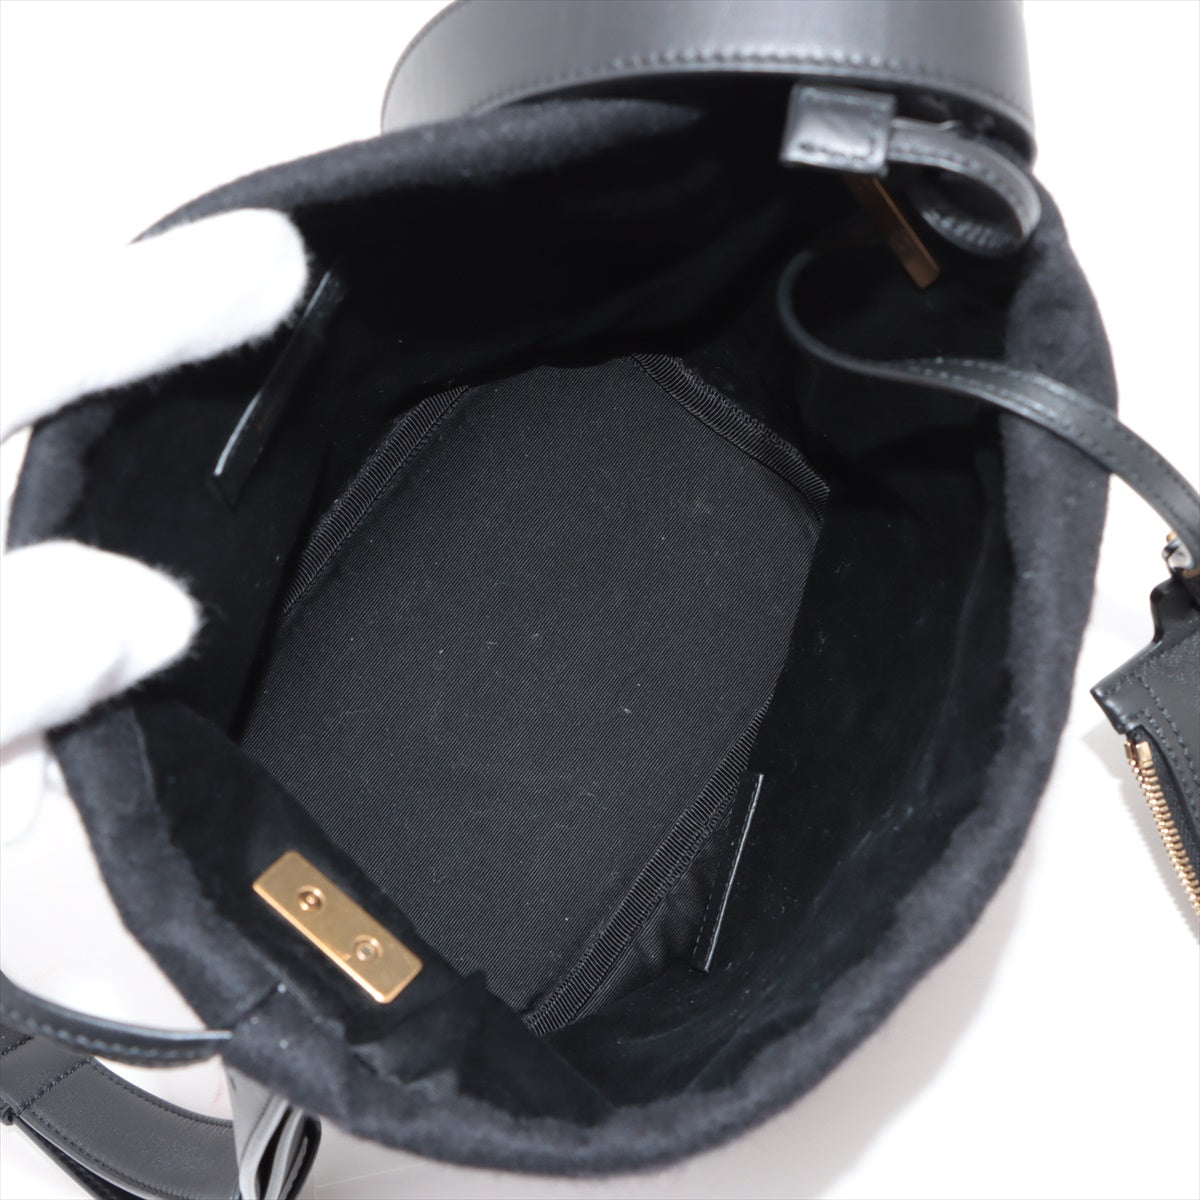 Saint Laurent  Rivgoth Felt x Leather Shoulder Bag Black 710261